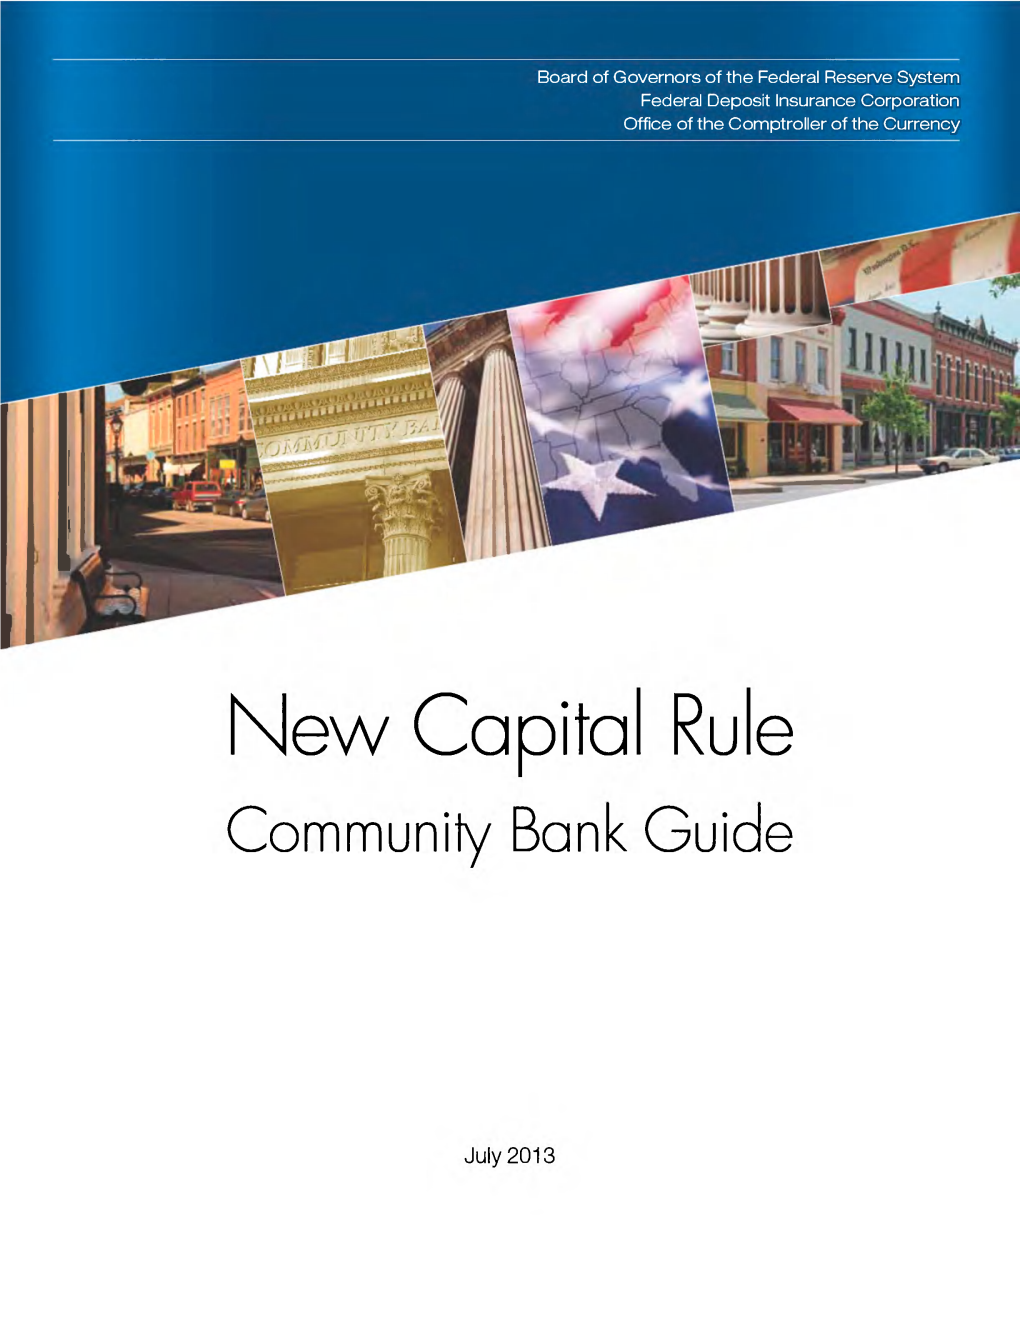 New Capital Rule: Community Bank Guide